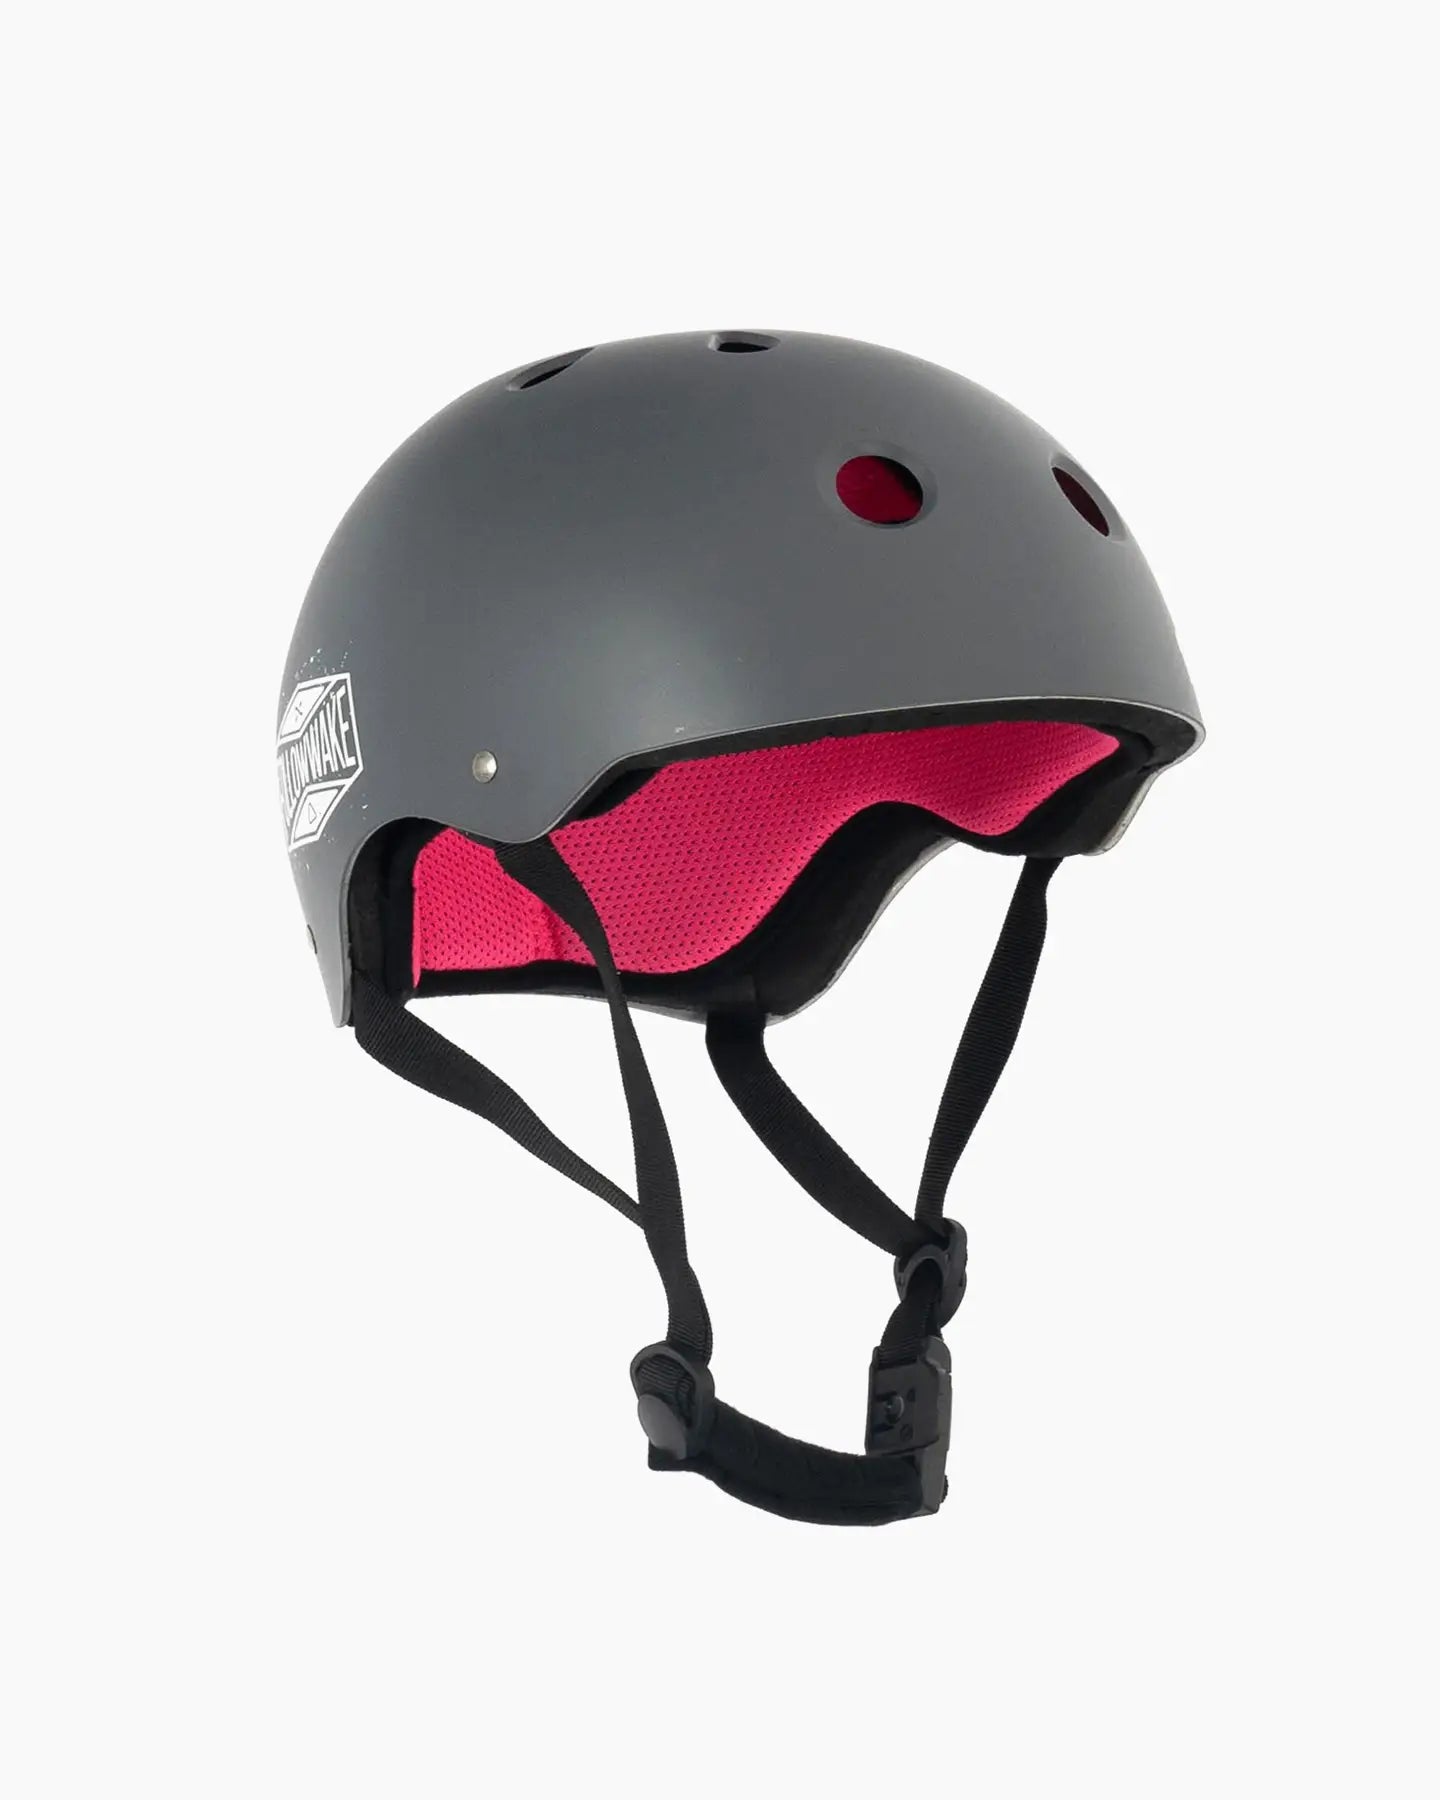 Follow Pro Helmet - Charcoal/Pink front